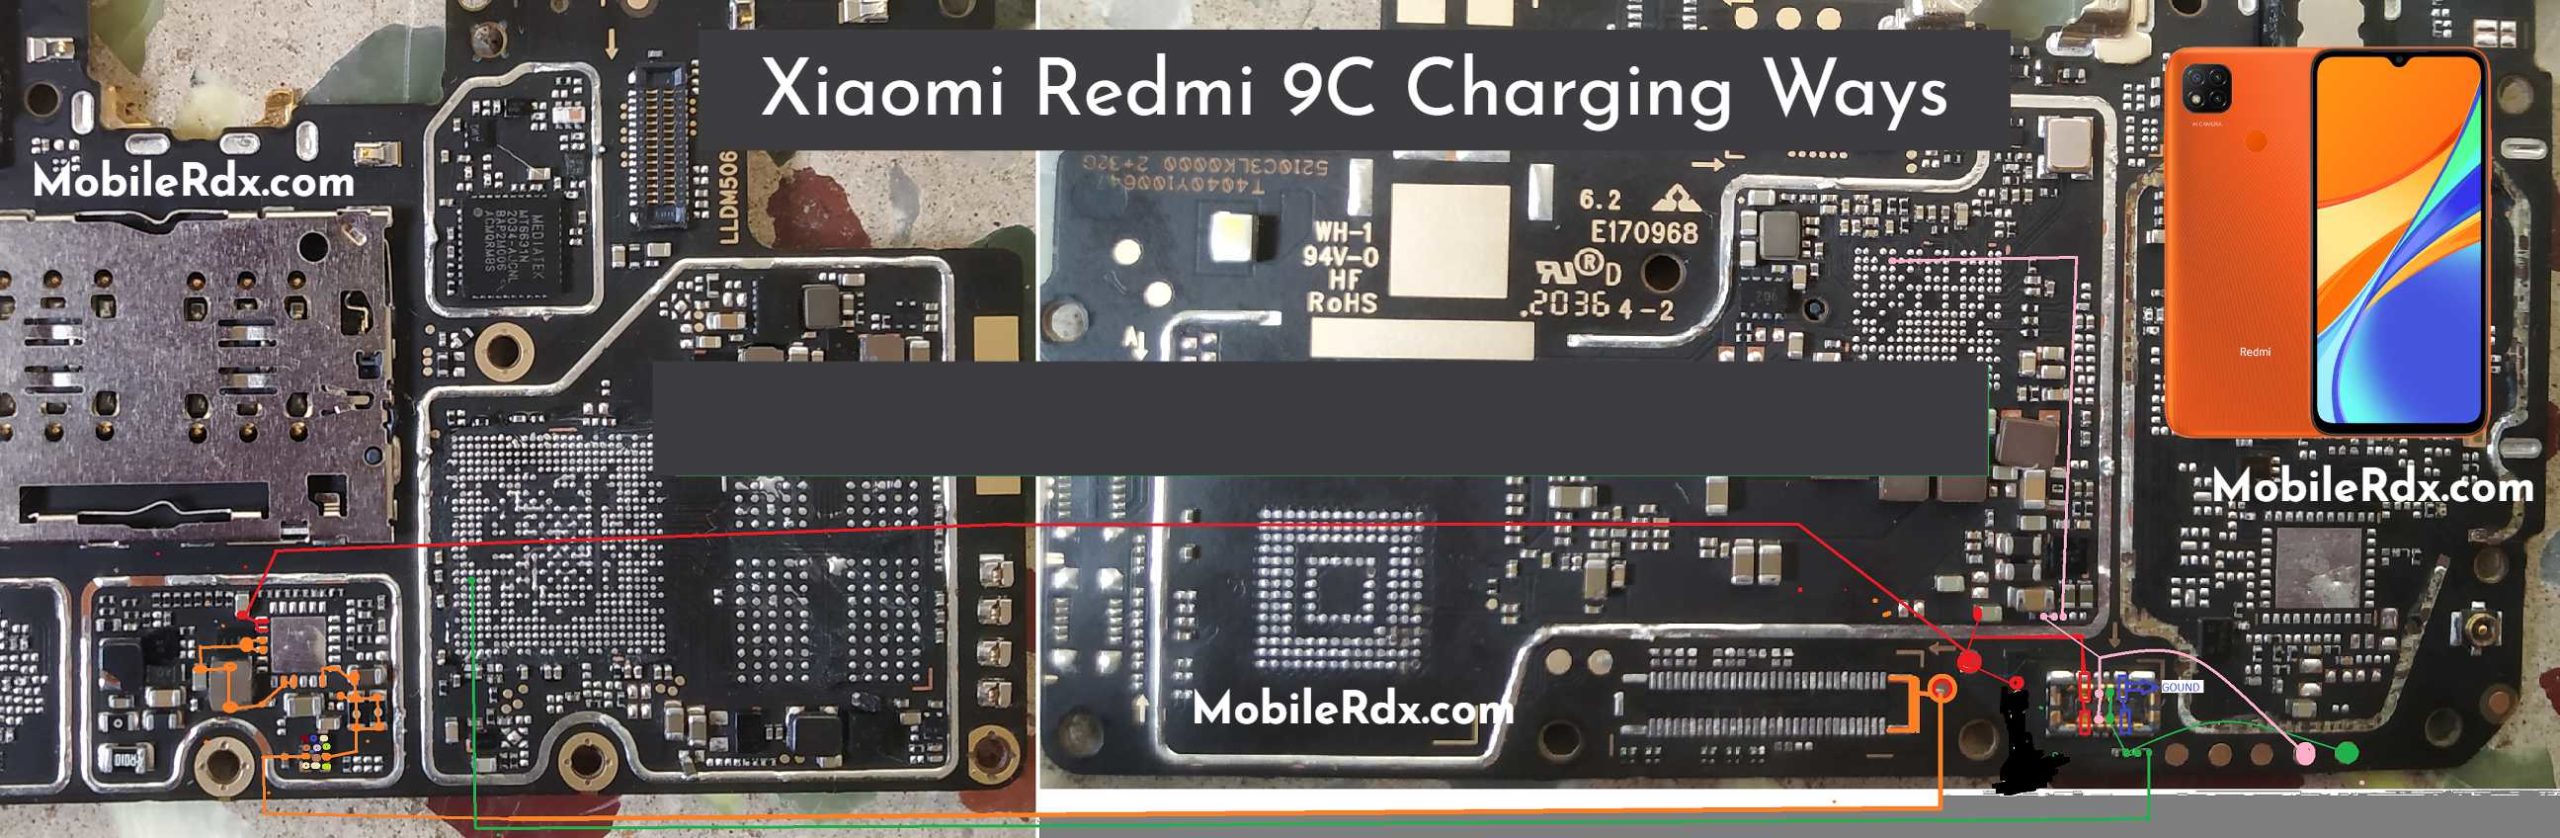 Xiaomi Redmi 9C Charging Ways   Repair Not Charging Problem scaled